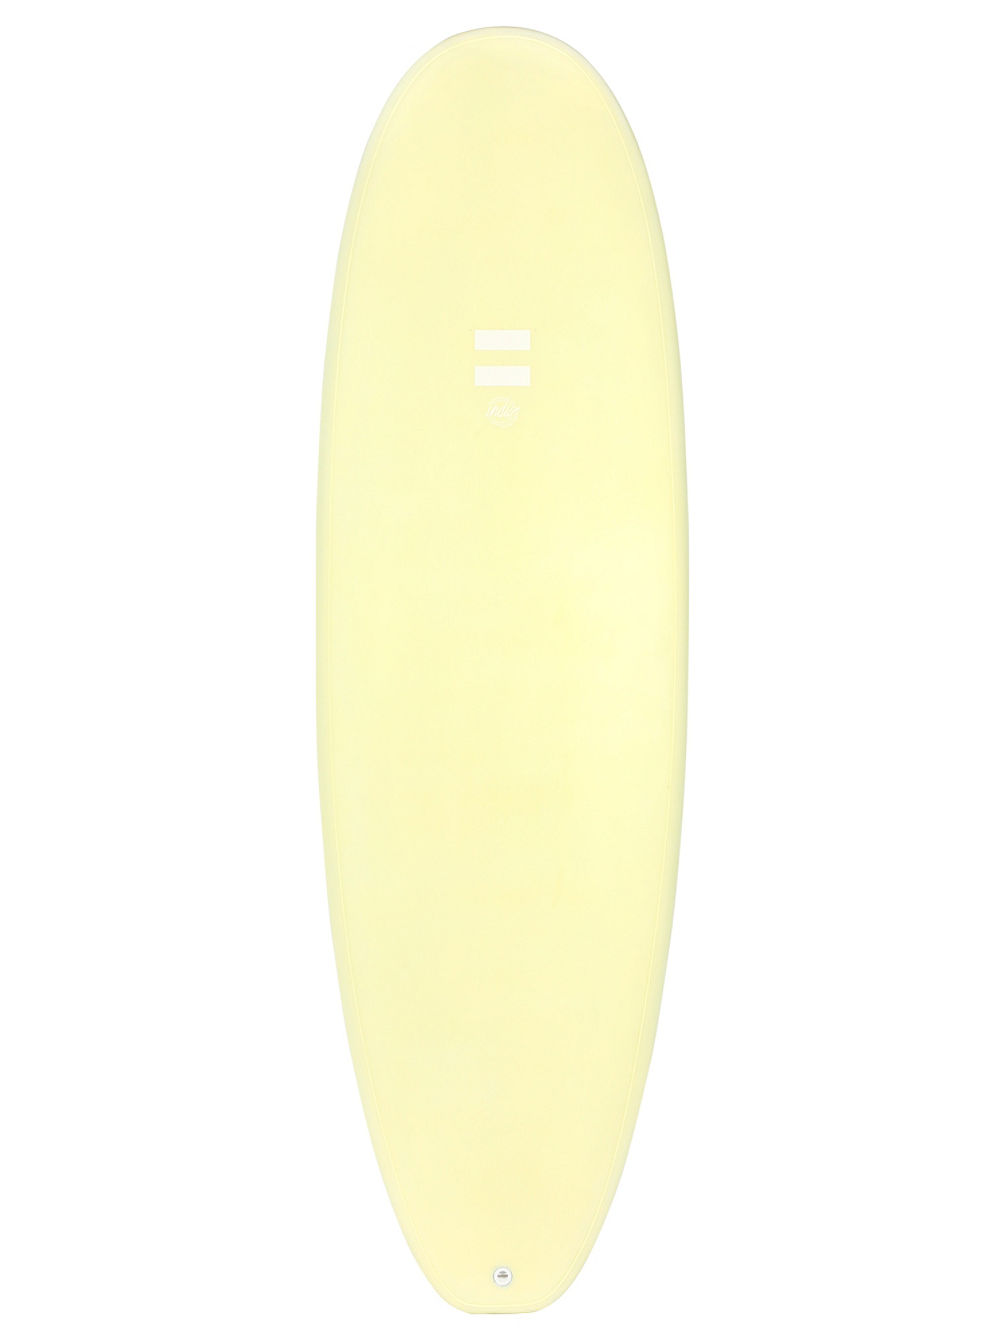 Plus 6&amp;#039;2 Surfboard